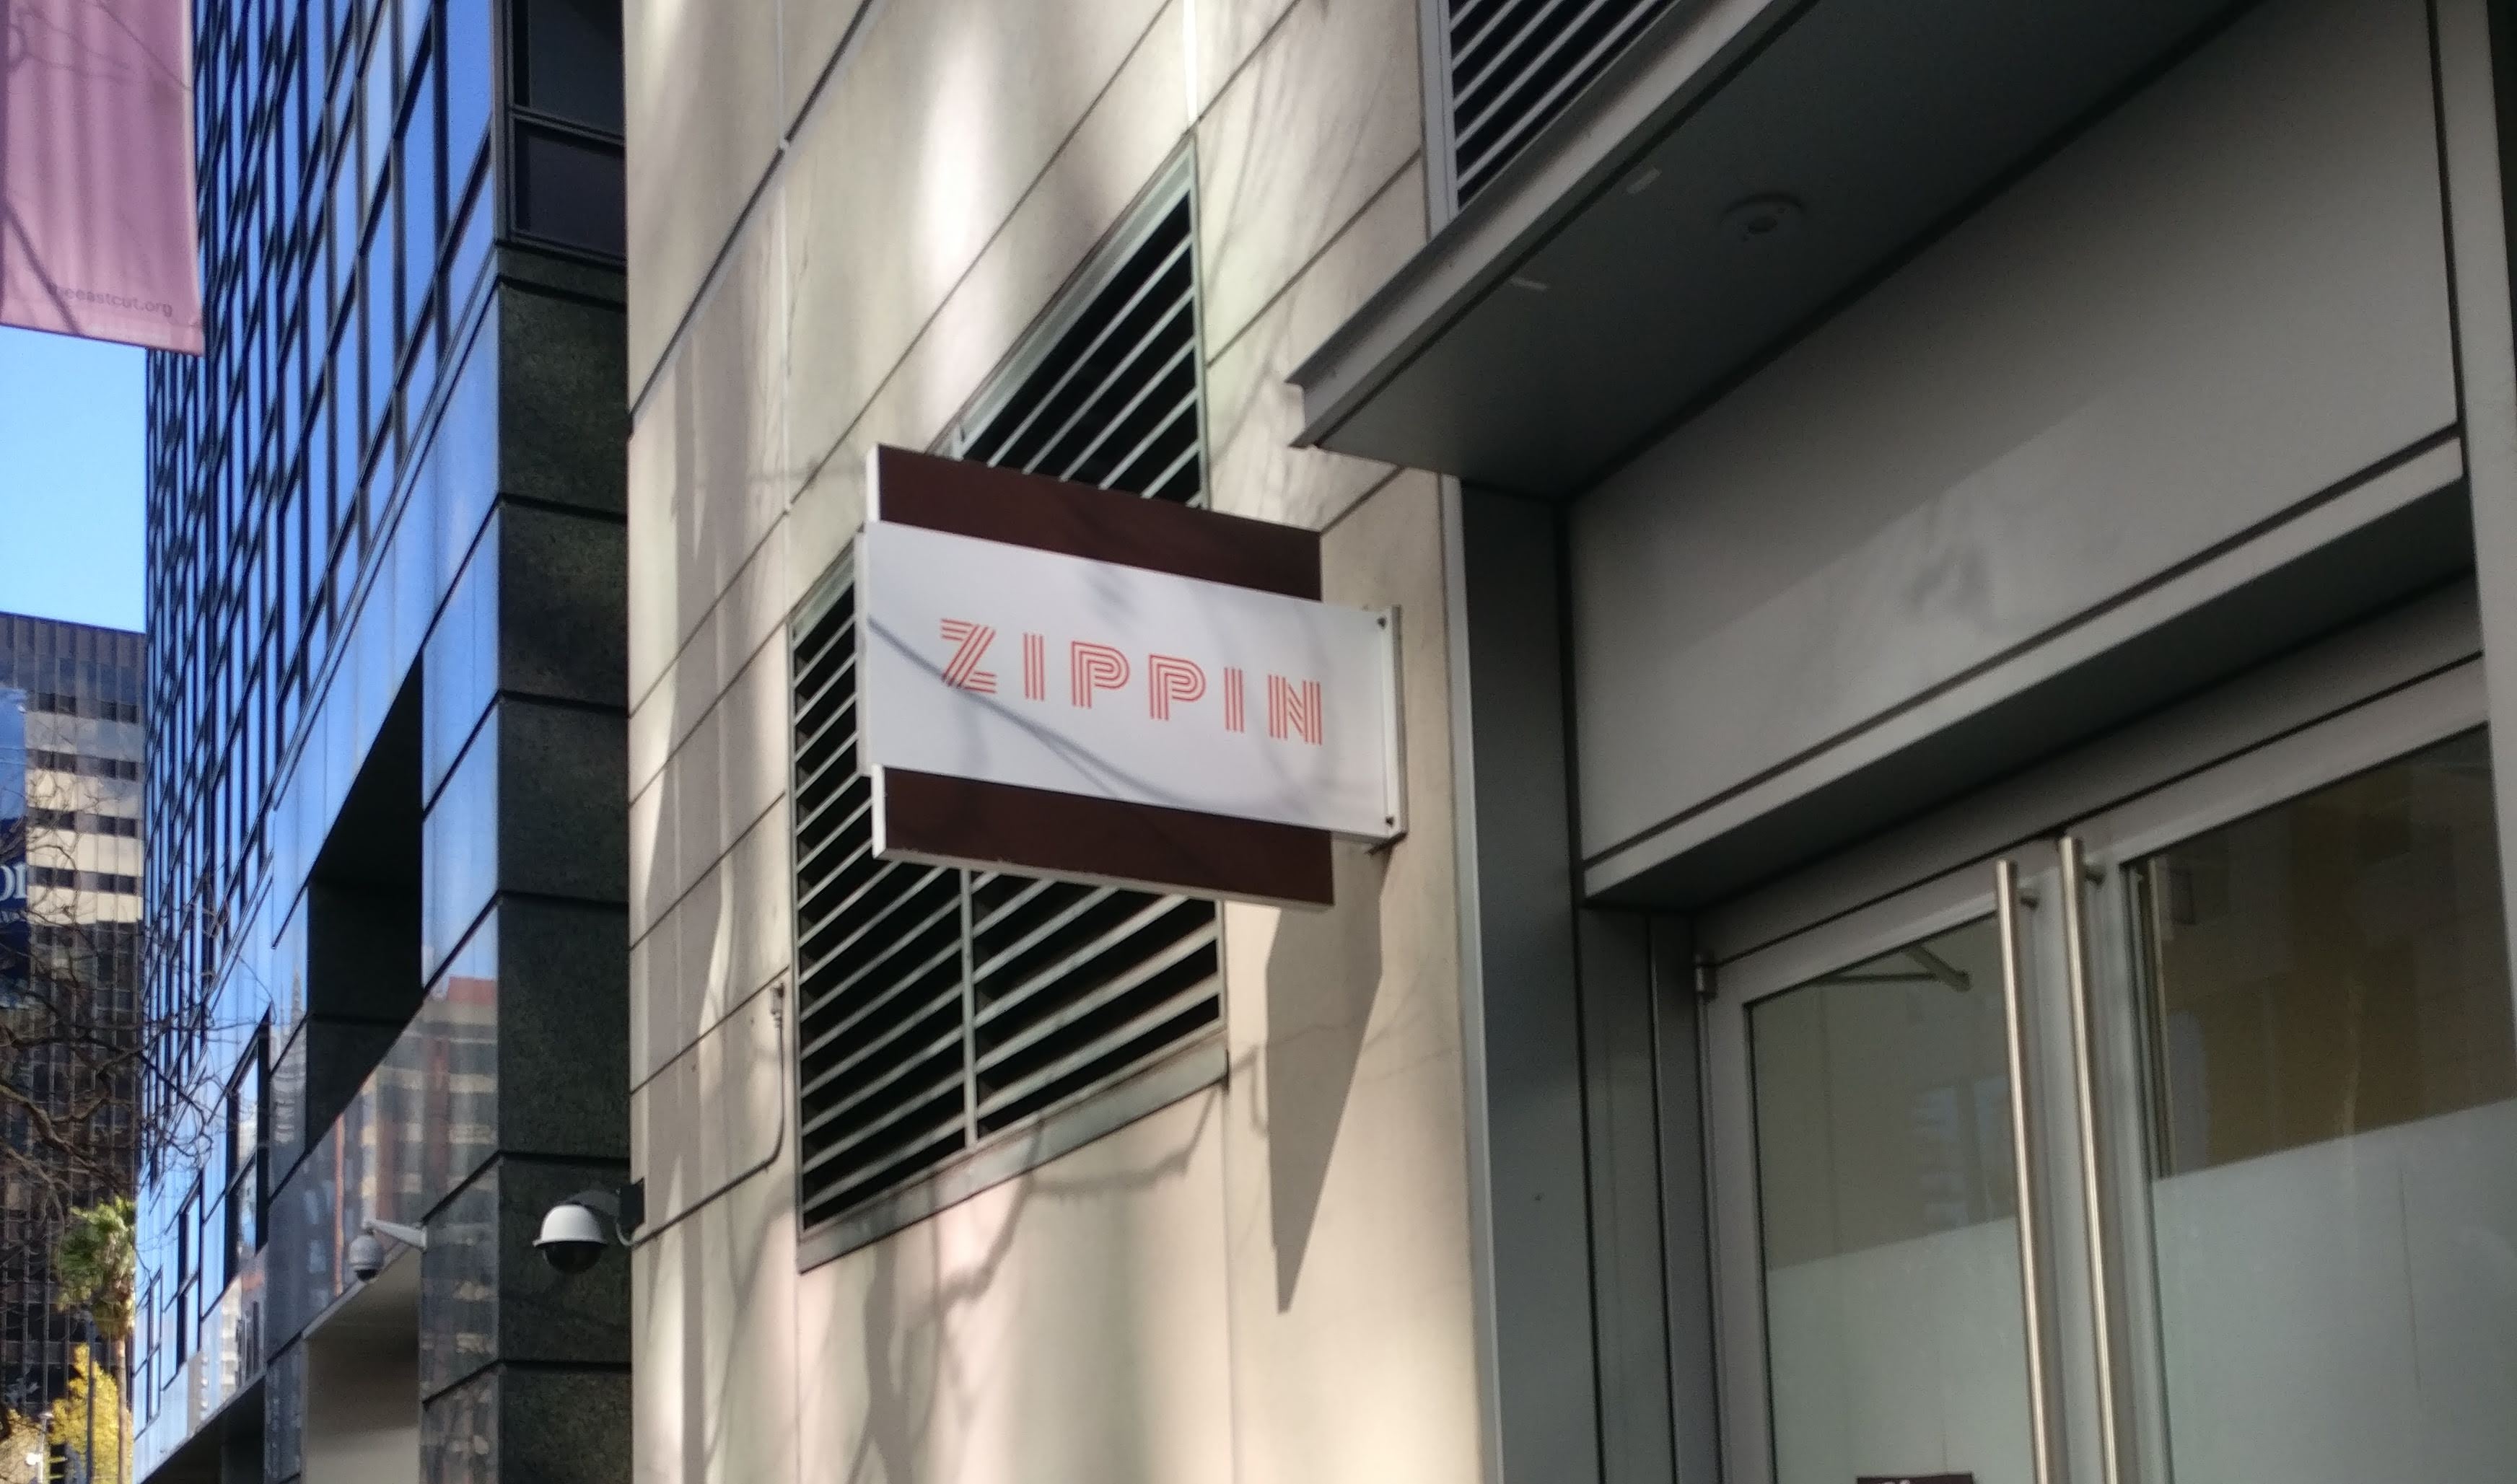 Zippin store #1 in San Francisco